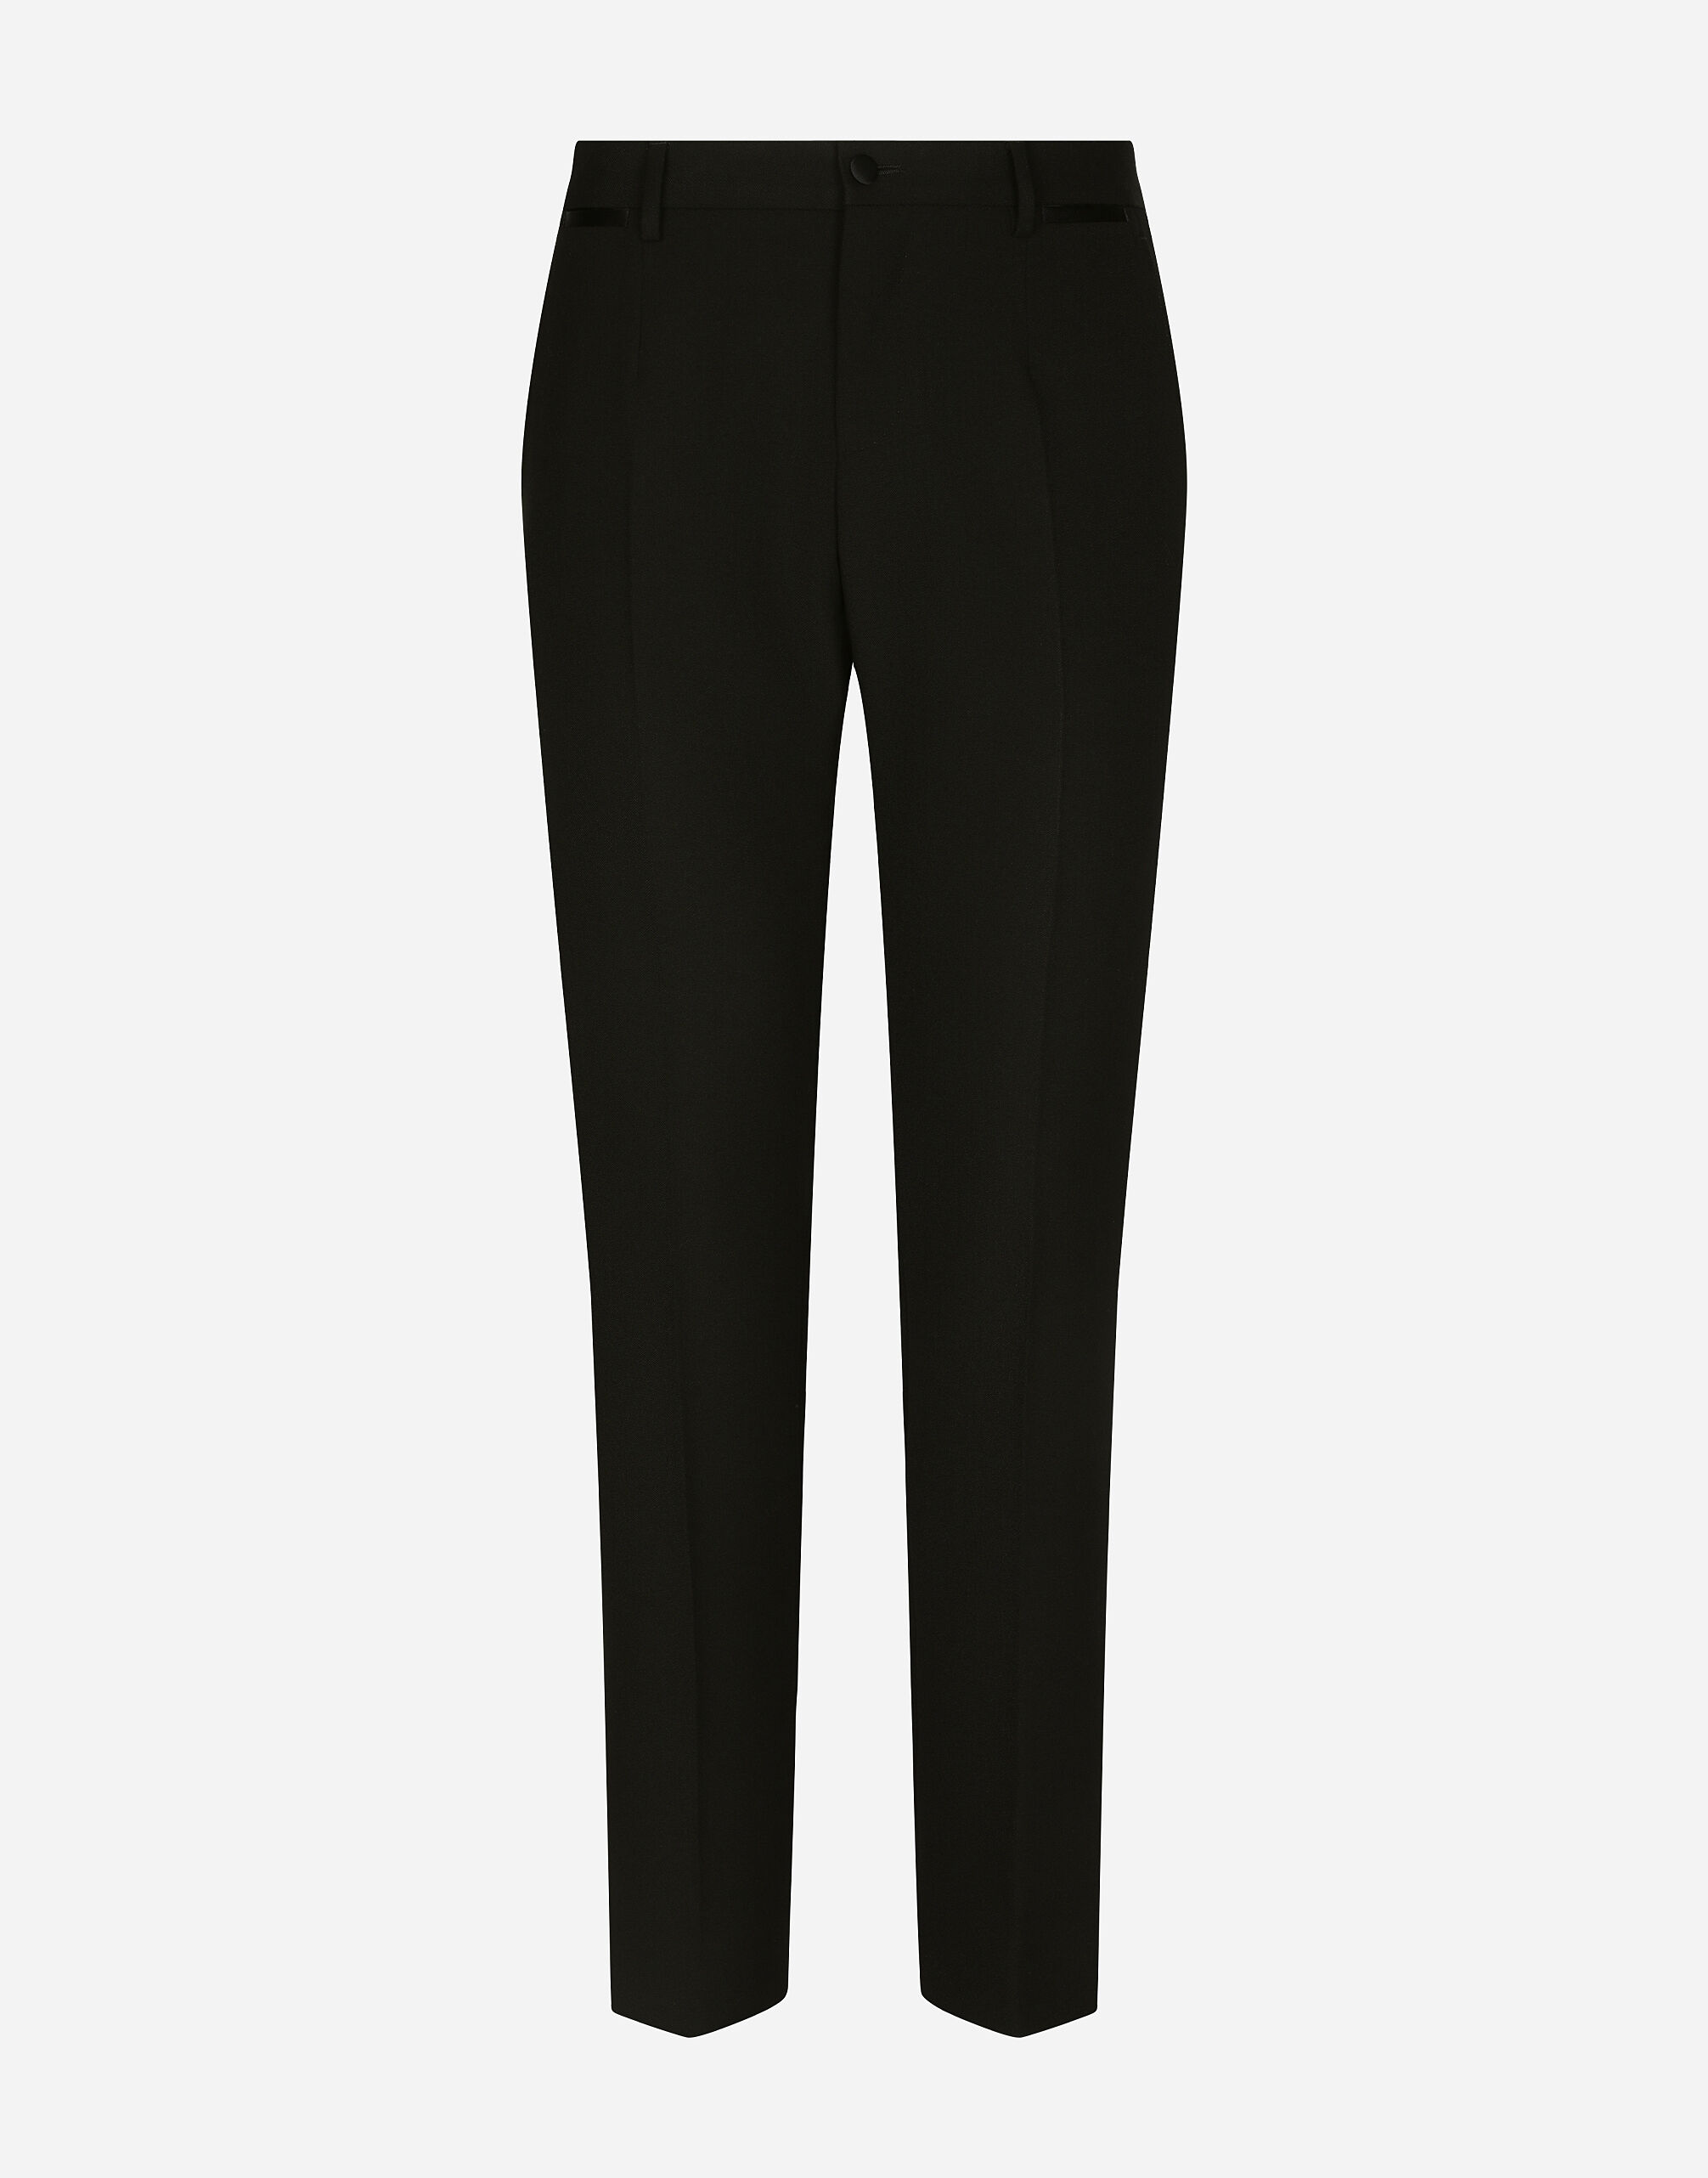 Dolce & Gabbana Tailored stretch wool tuxedo pants Multicolor GV1CXTFU4KJ